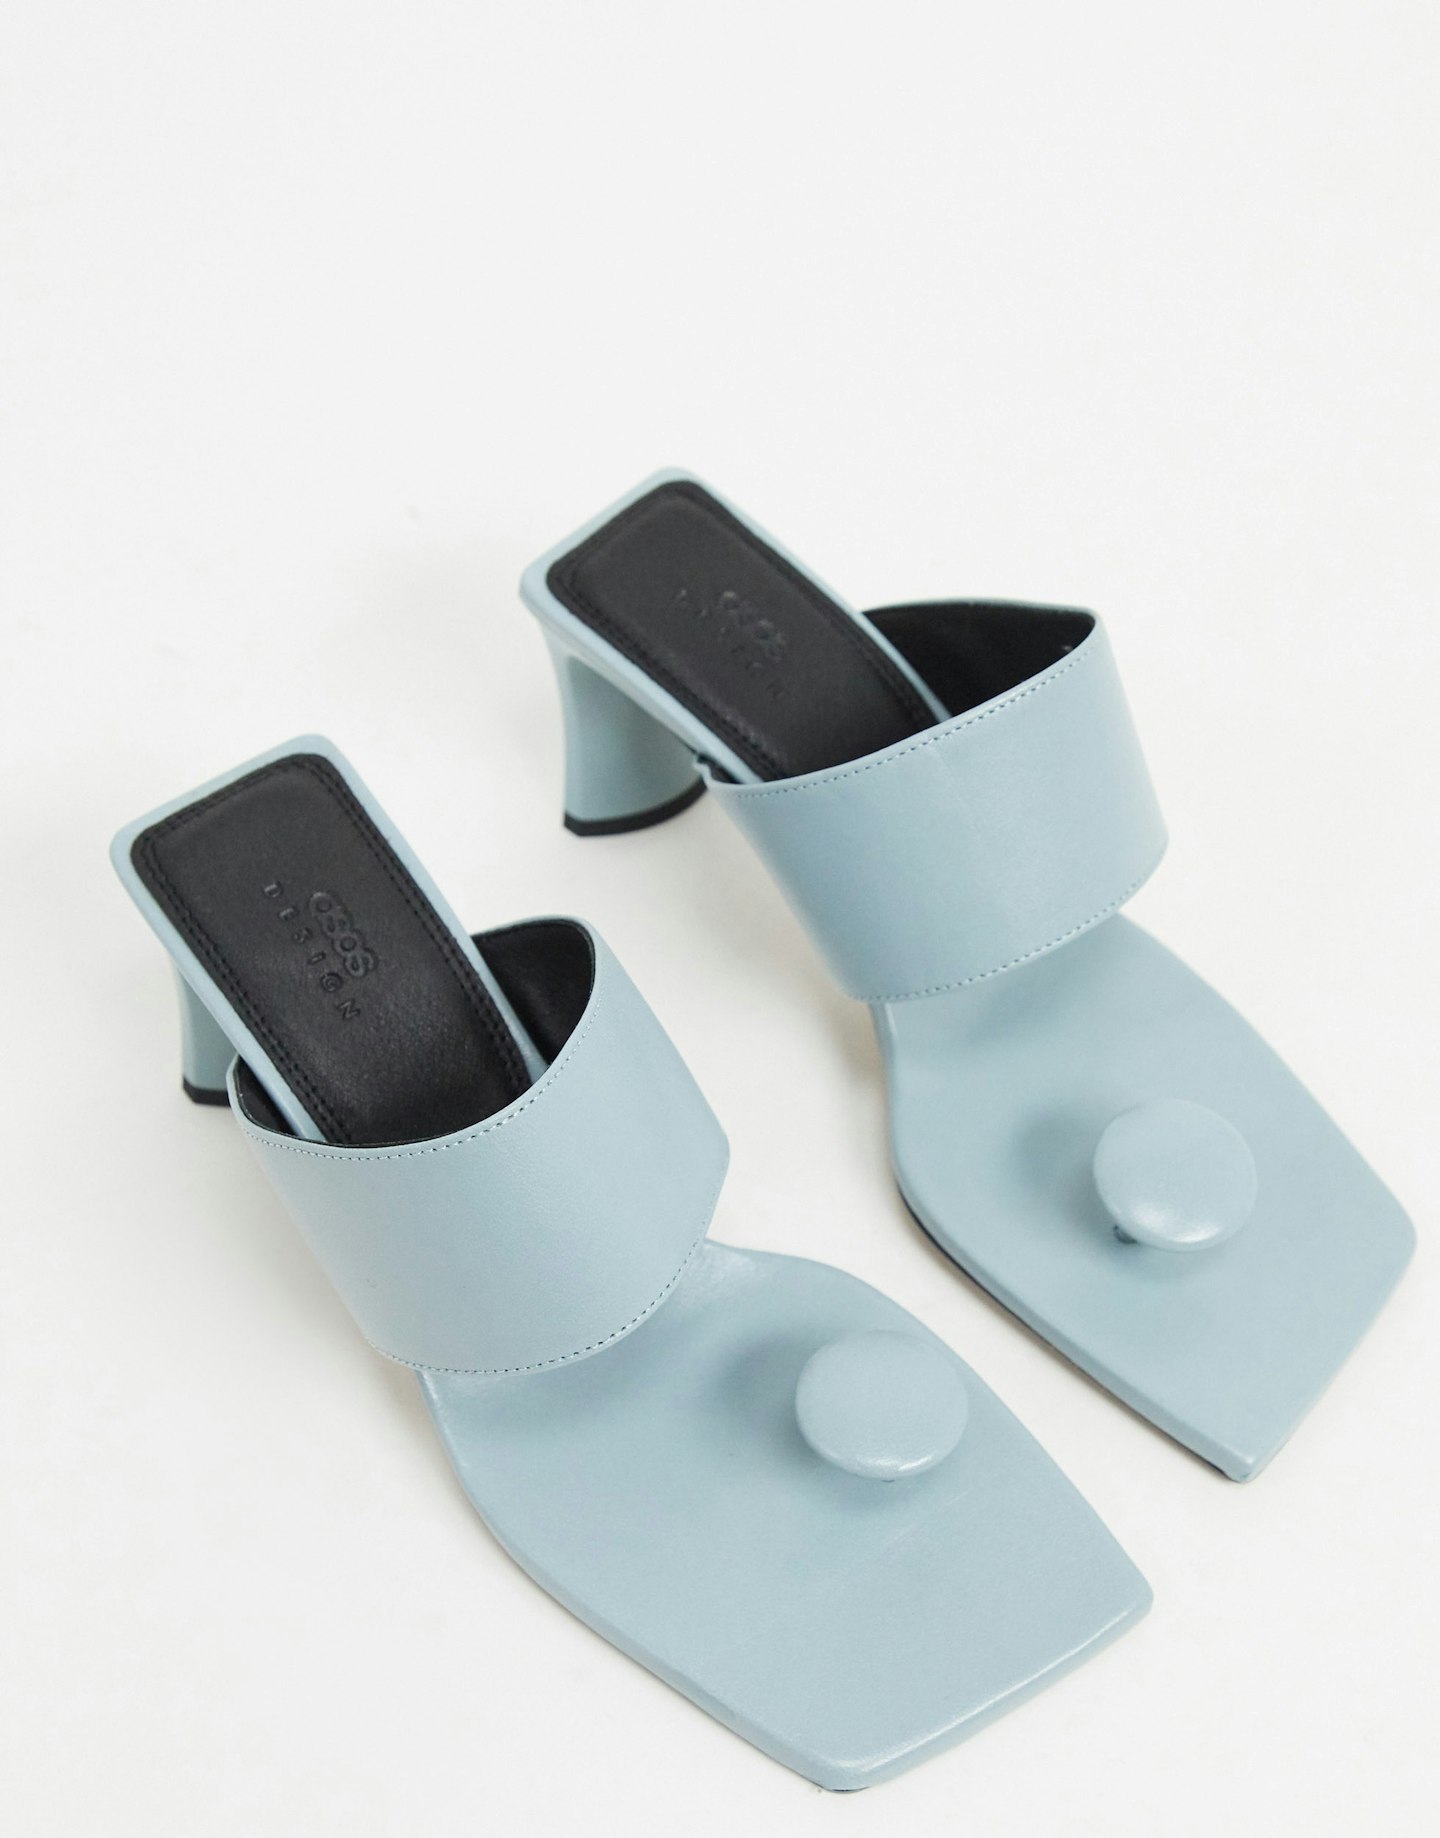 ASOS DESIGN, premium leather toe post mid-heeled sandals in blue, £60.00